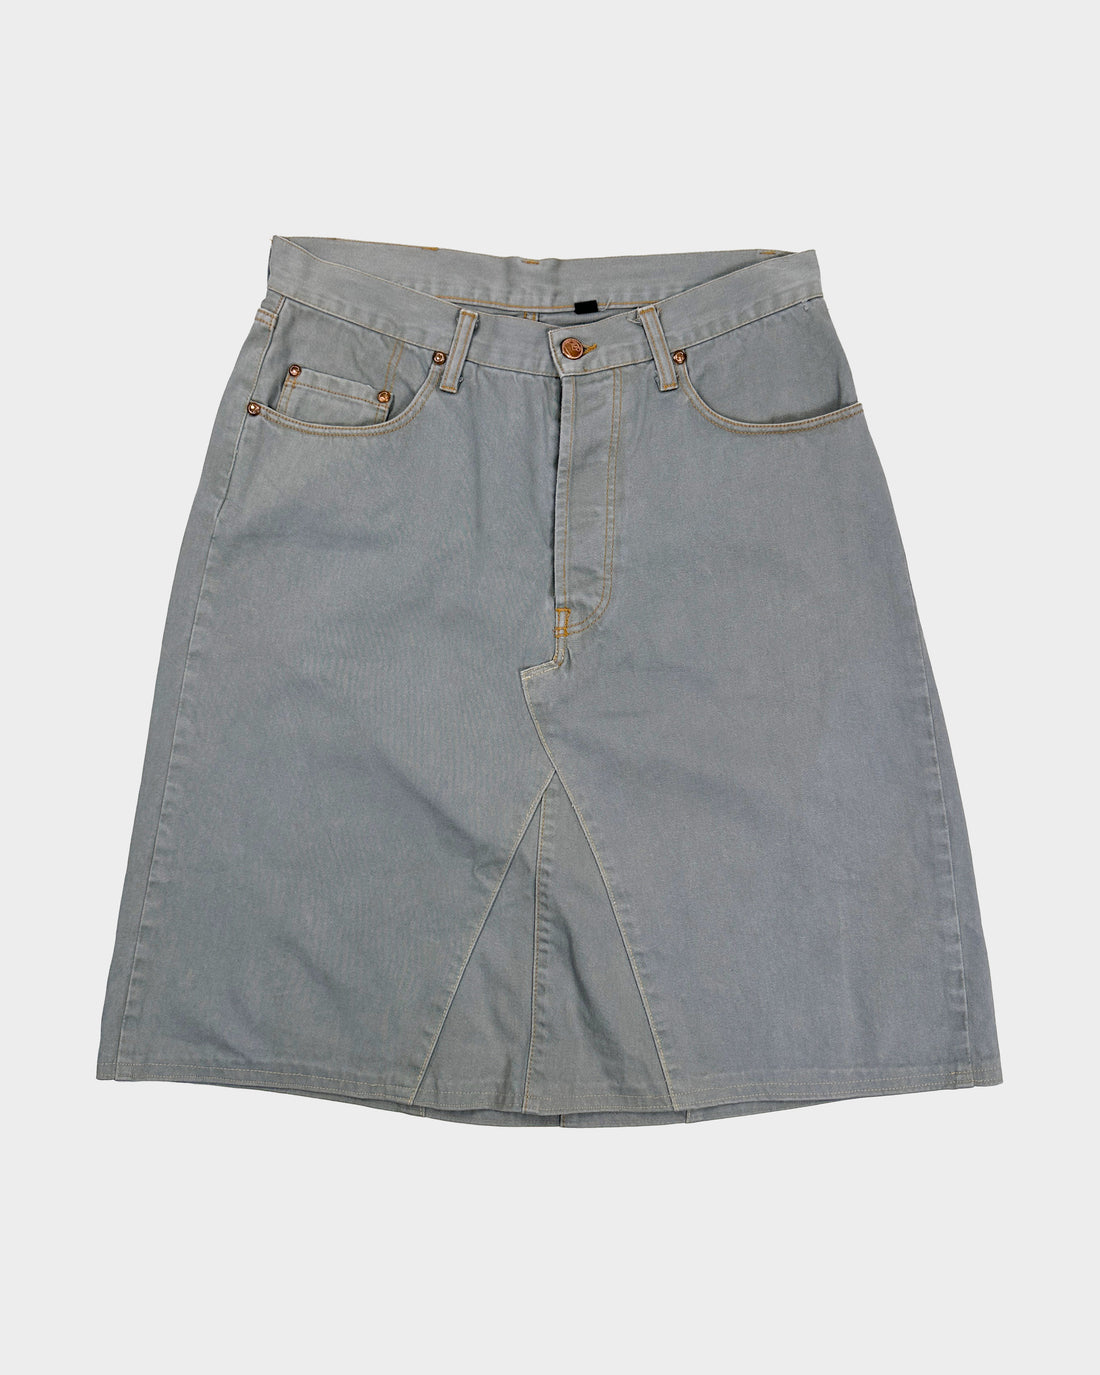 Kenzo Grey Denim Skirt 2000's